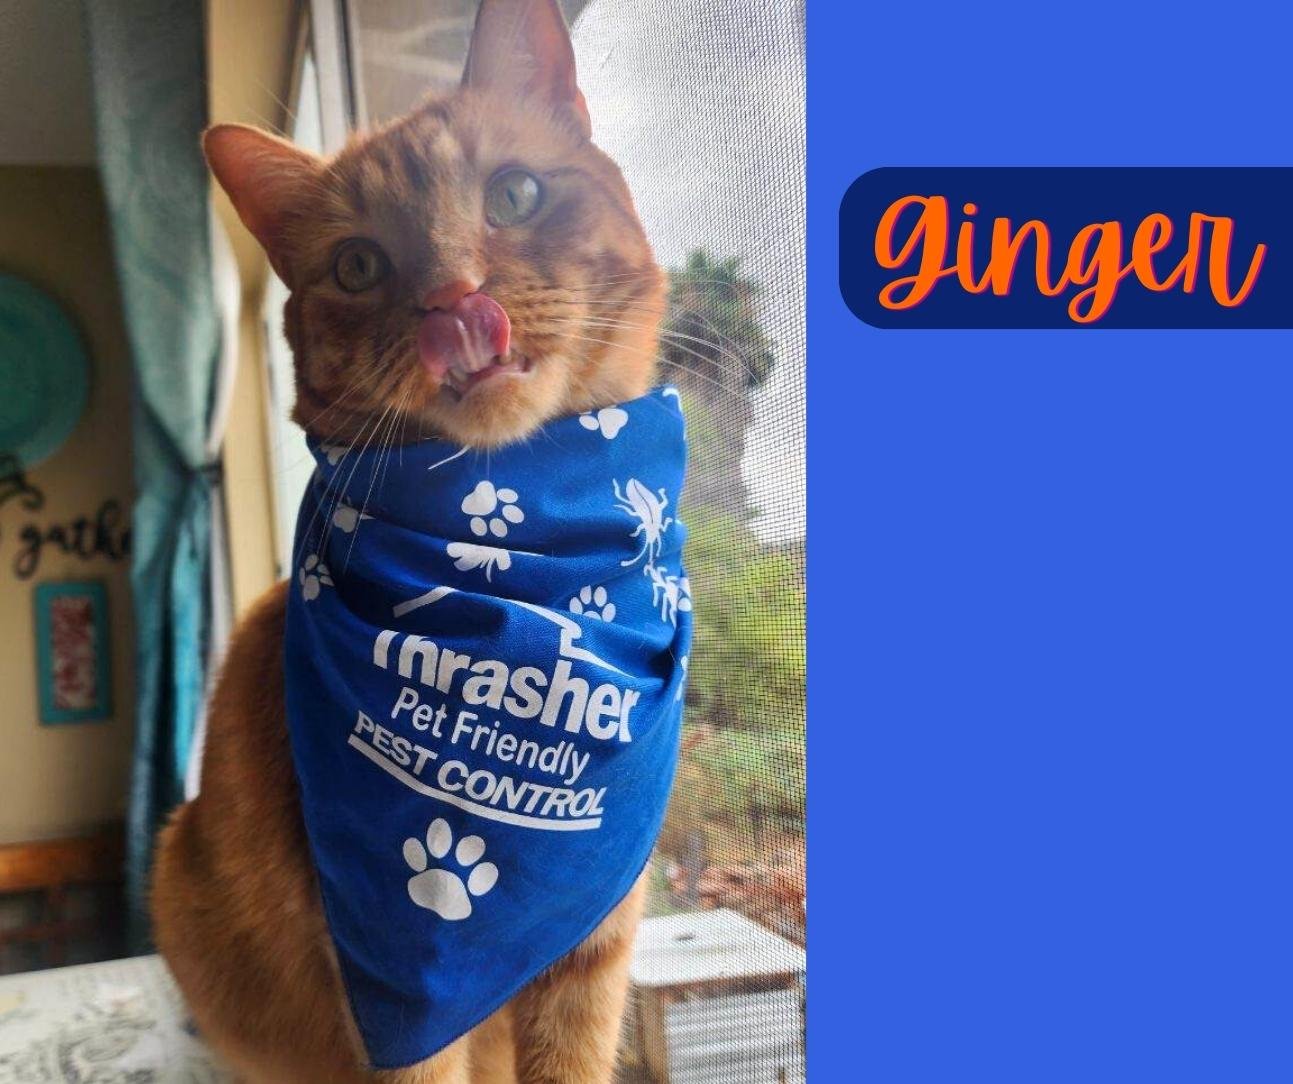 Ginger_Thrasher_Pet_Friendly_Pet_Control_Simba